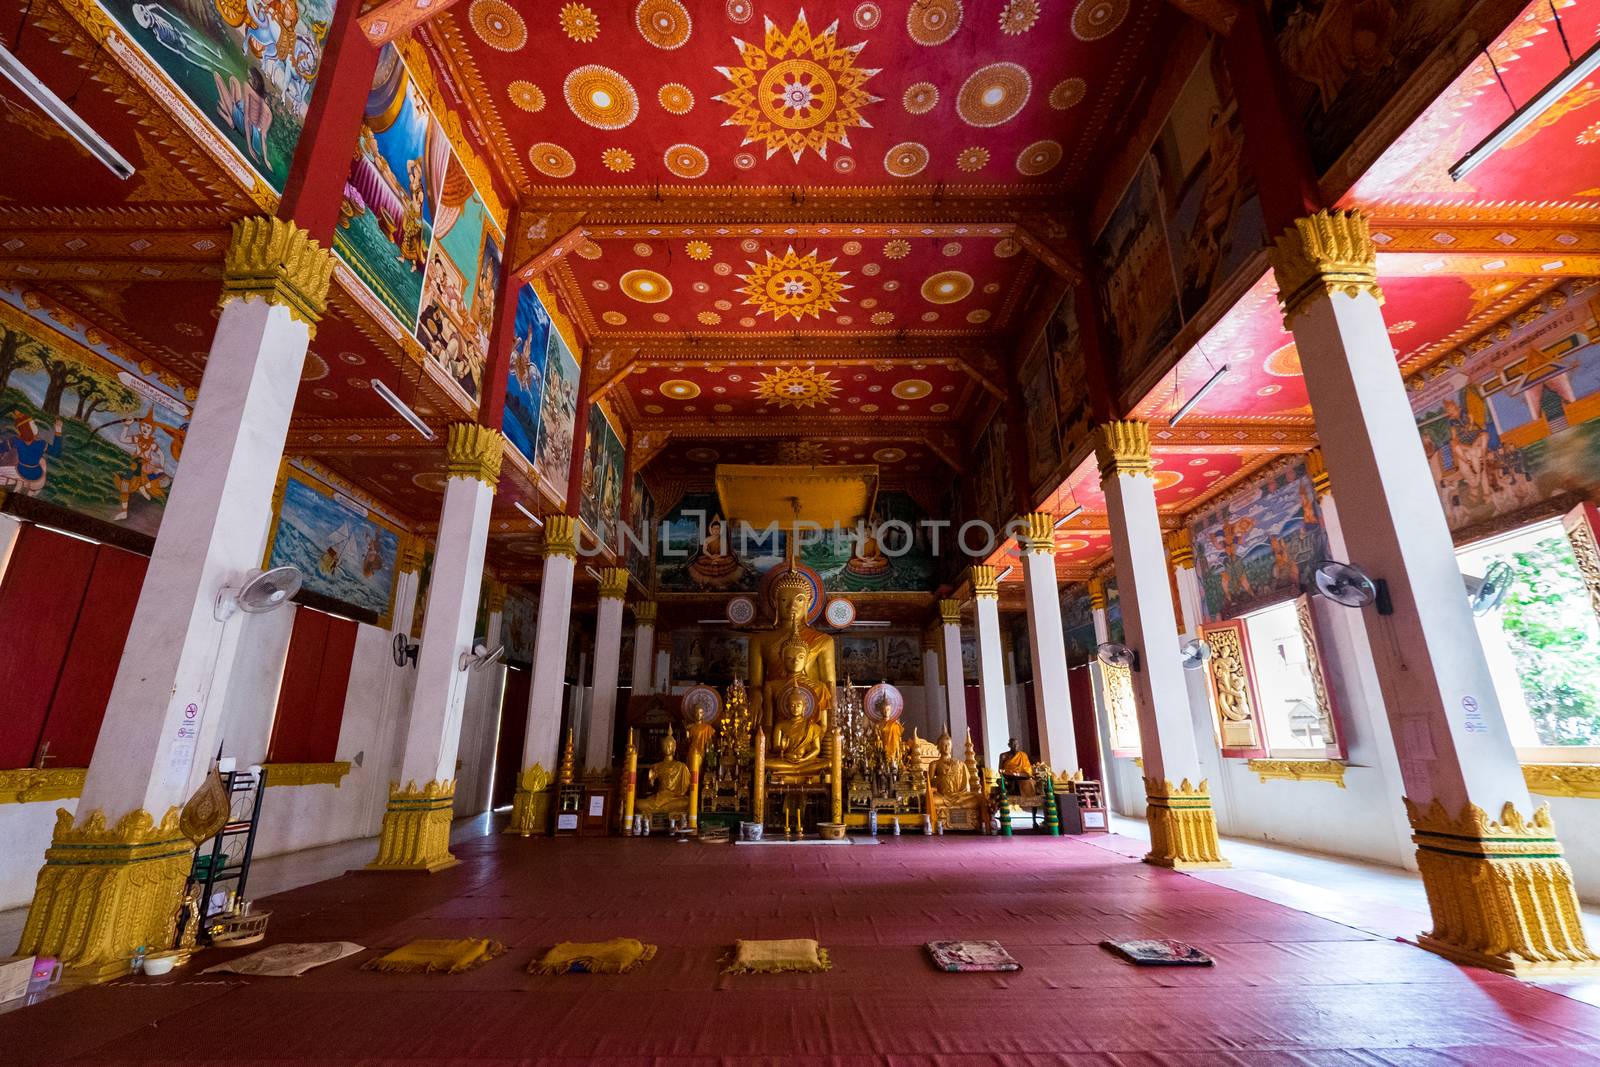 Laos temple by jangnhut